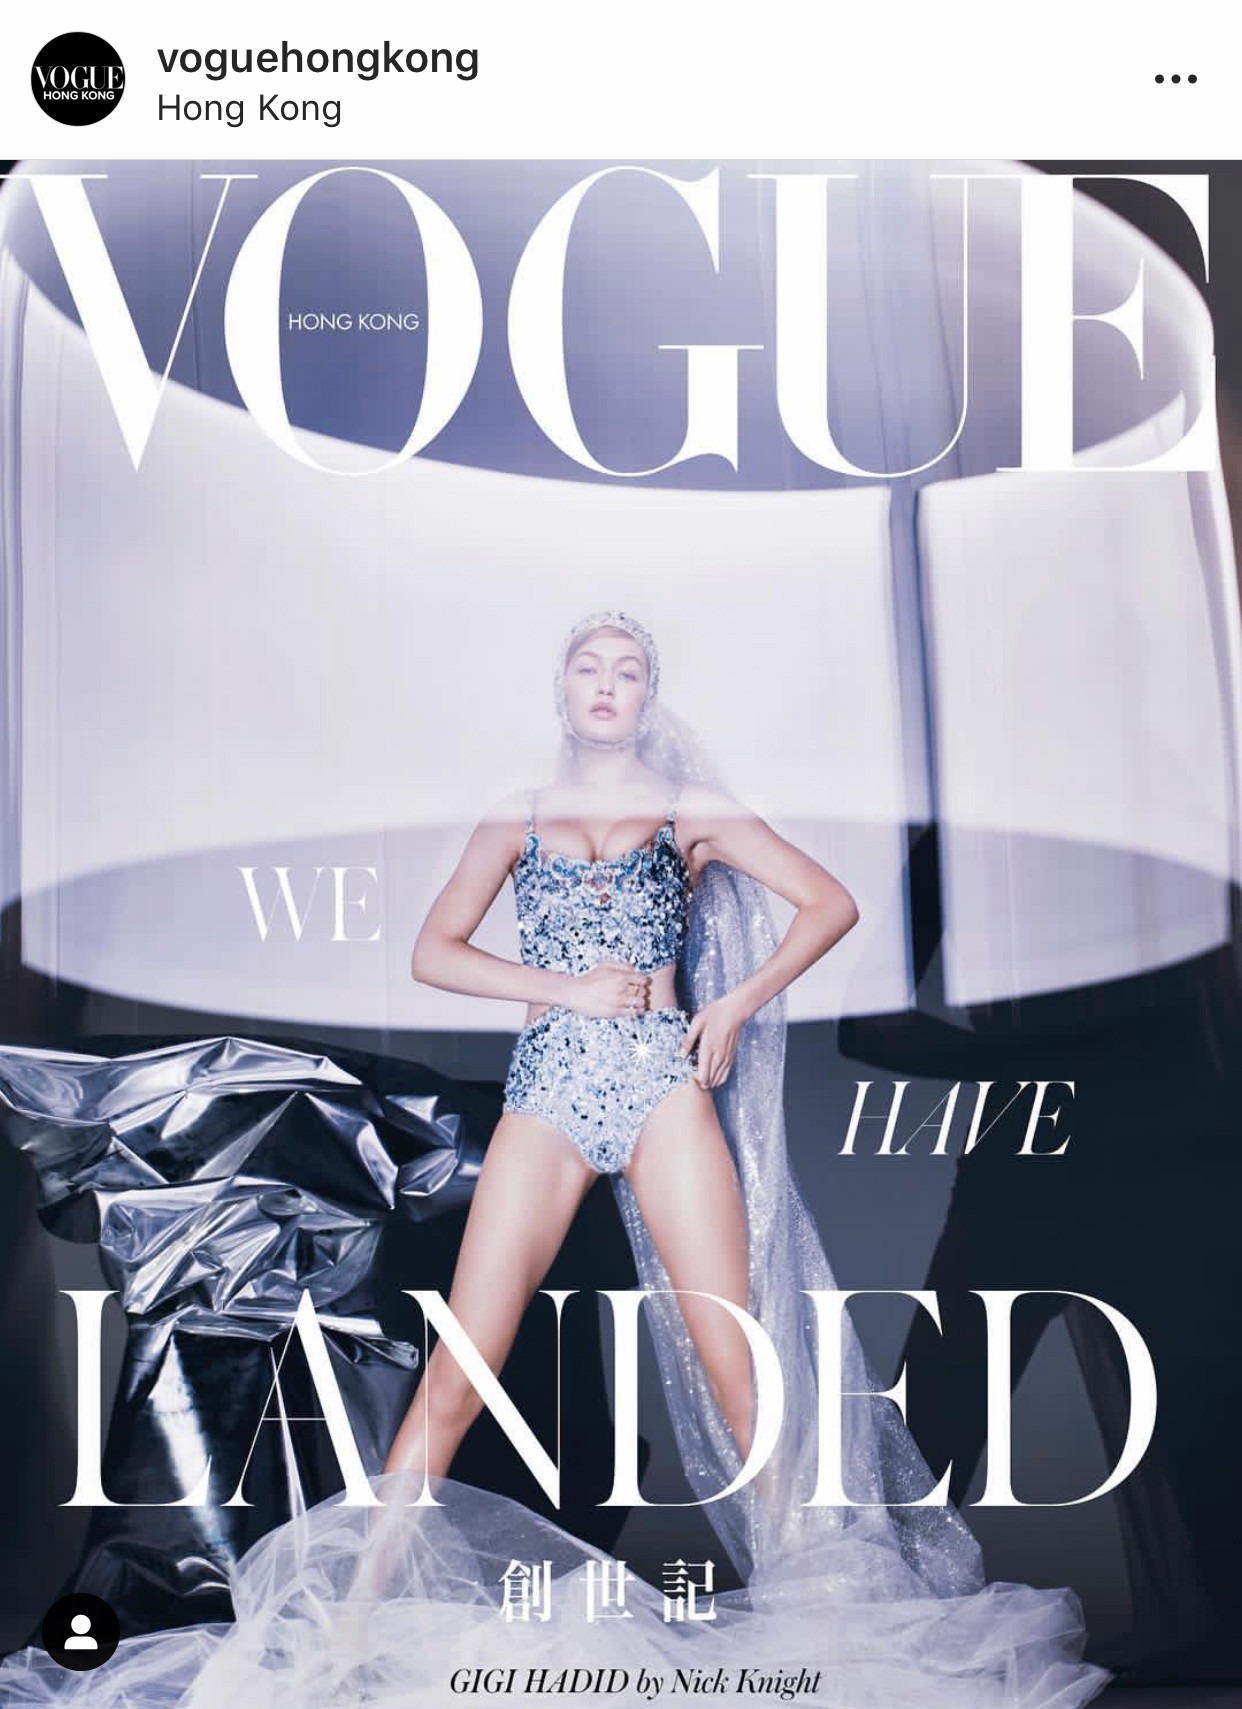 Gigi Hadids New Vogue Cover Draws Ire In Hong Kong E News 